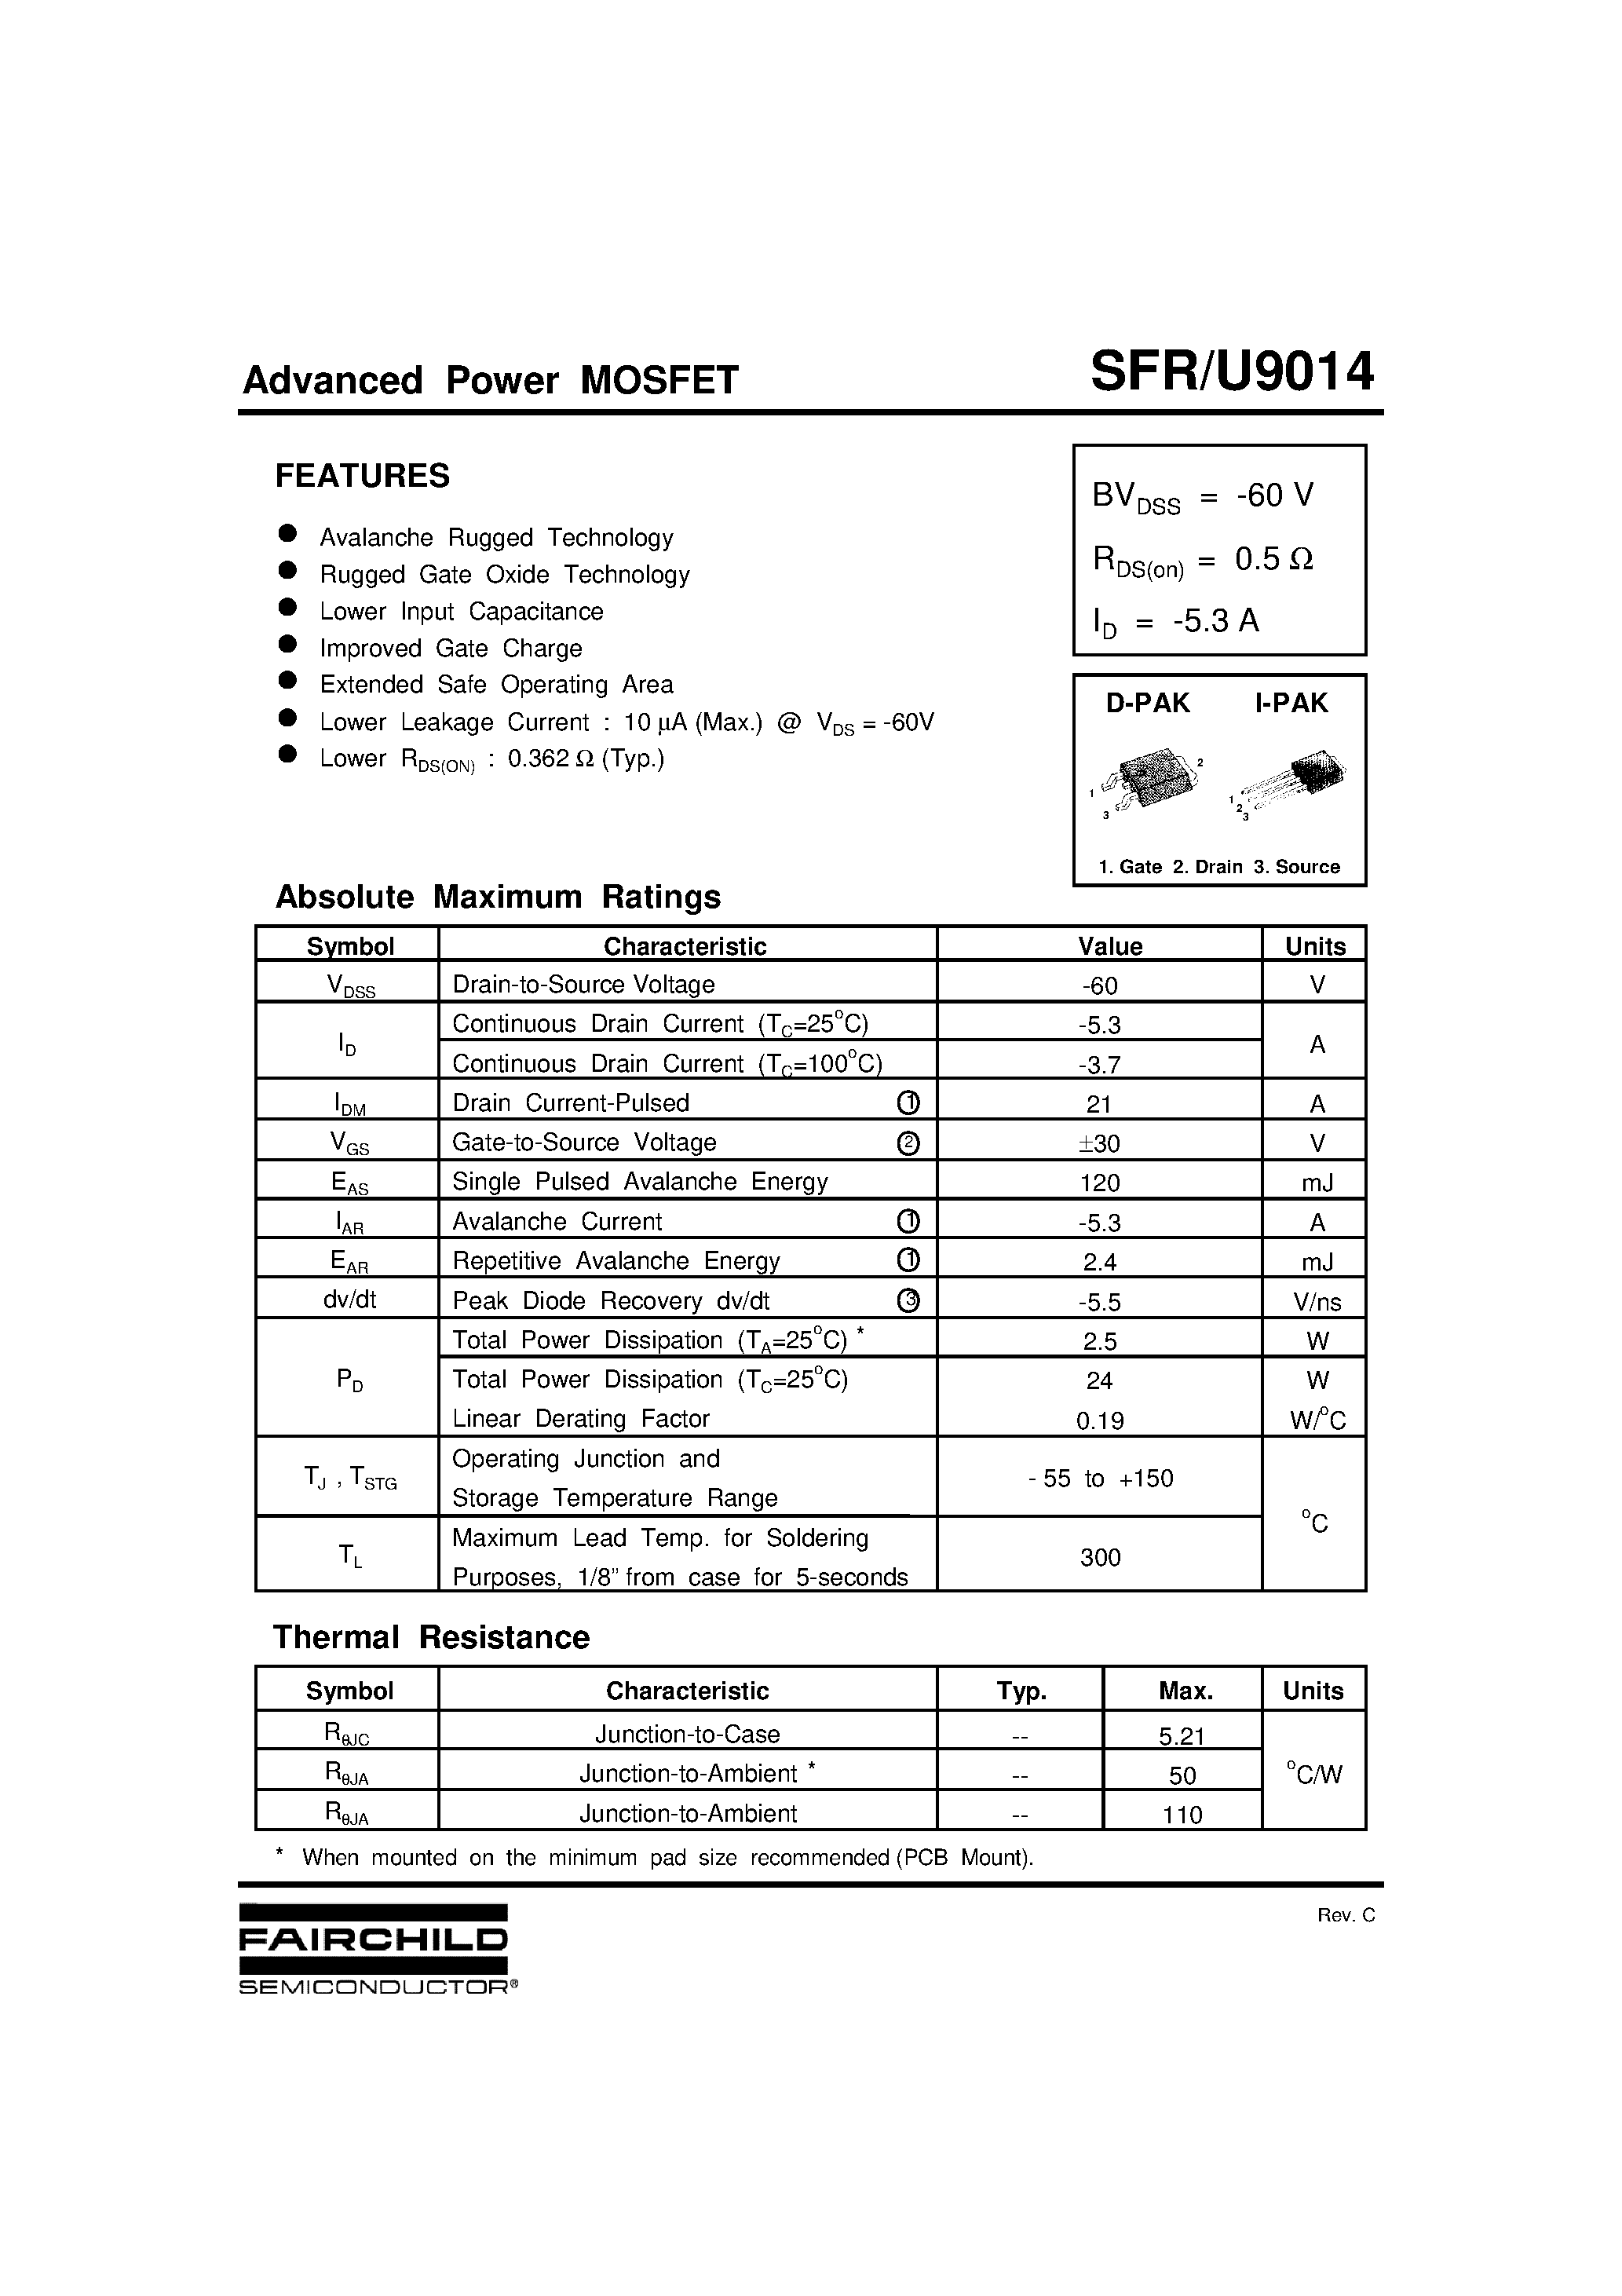 Datasheet SFR/U9014 - Advanced Power MOSFET page 1